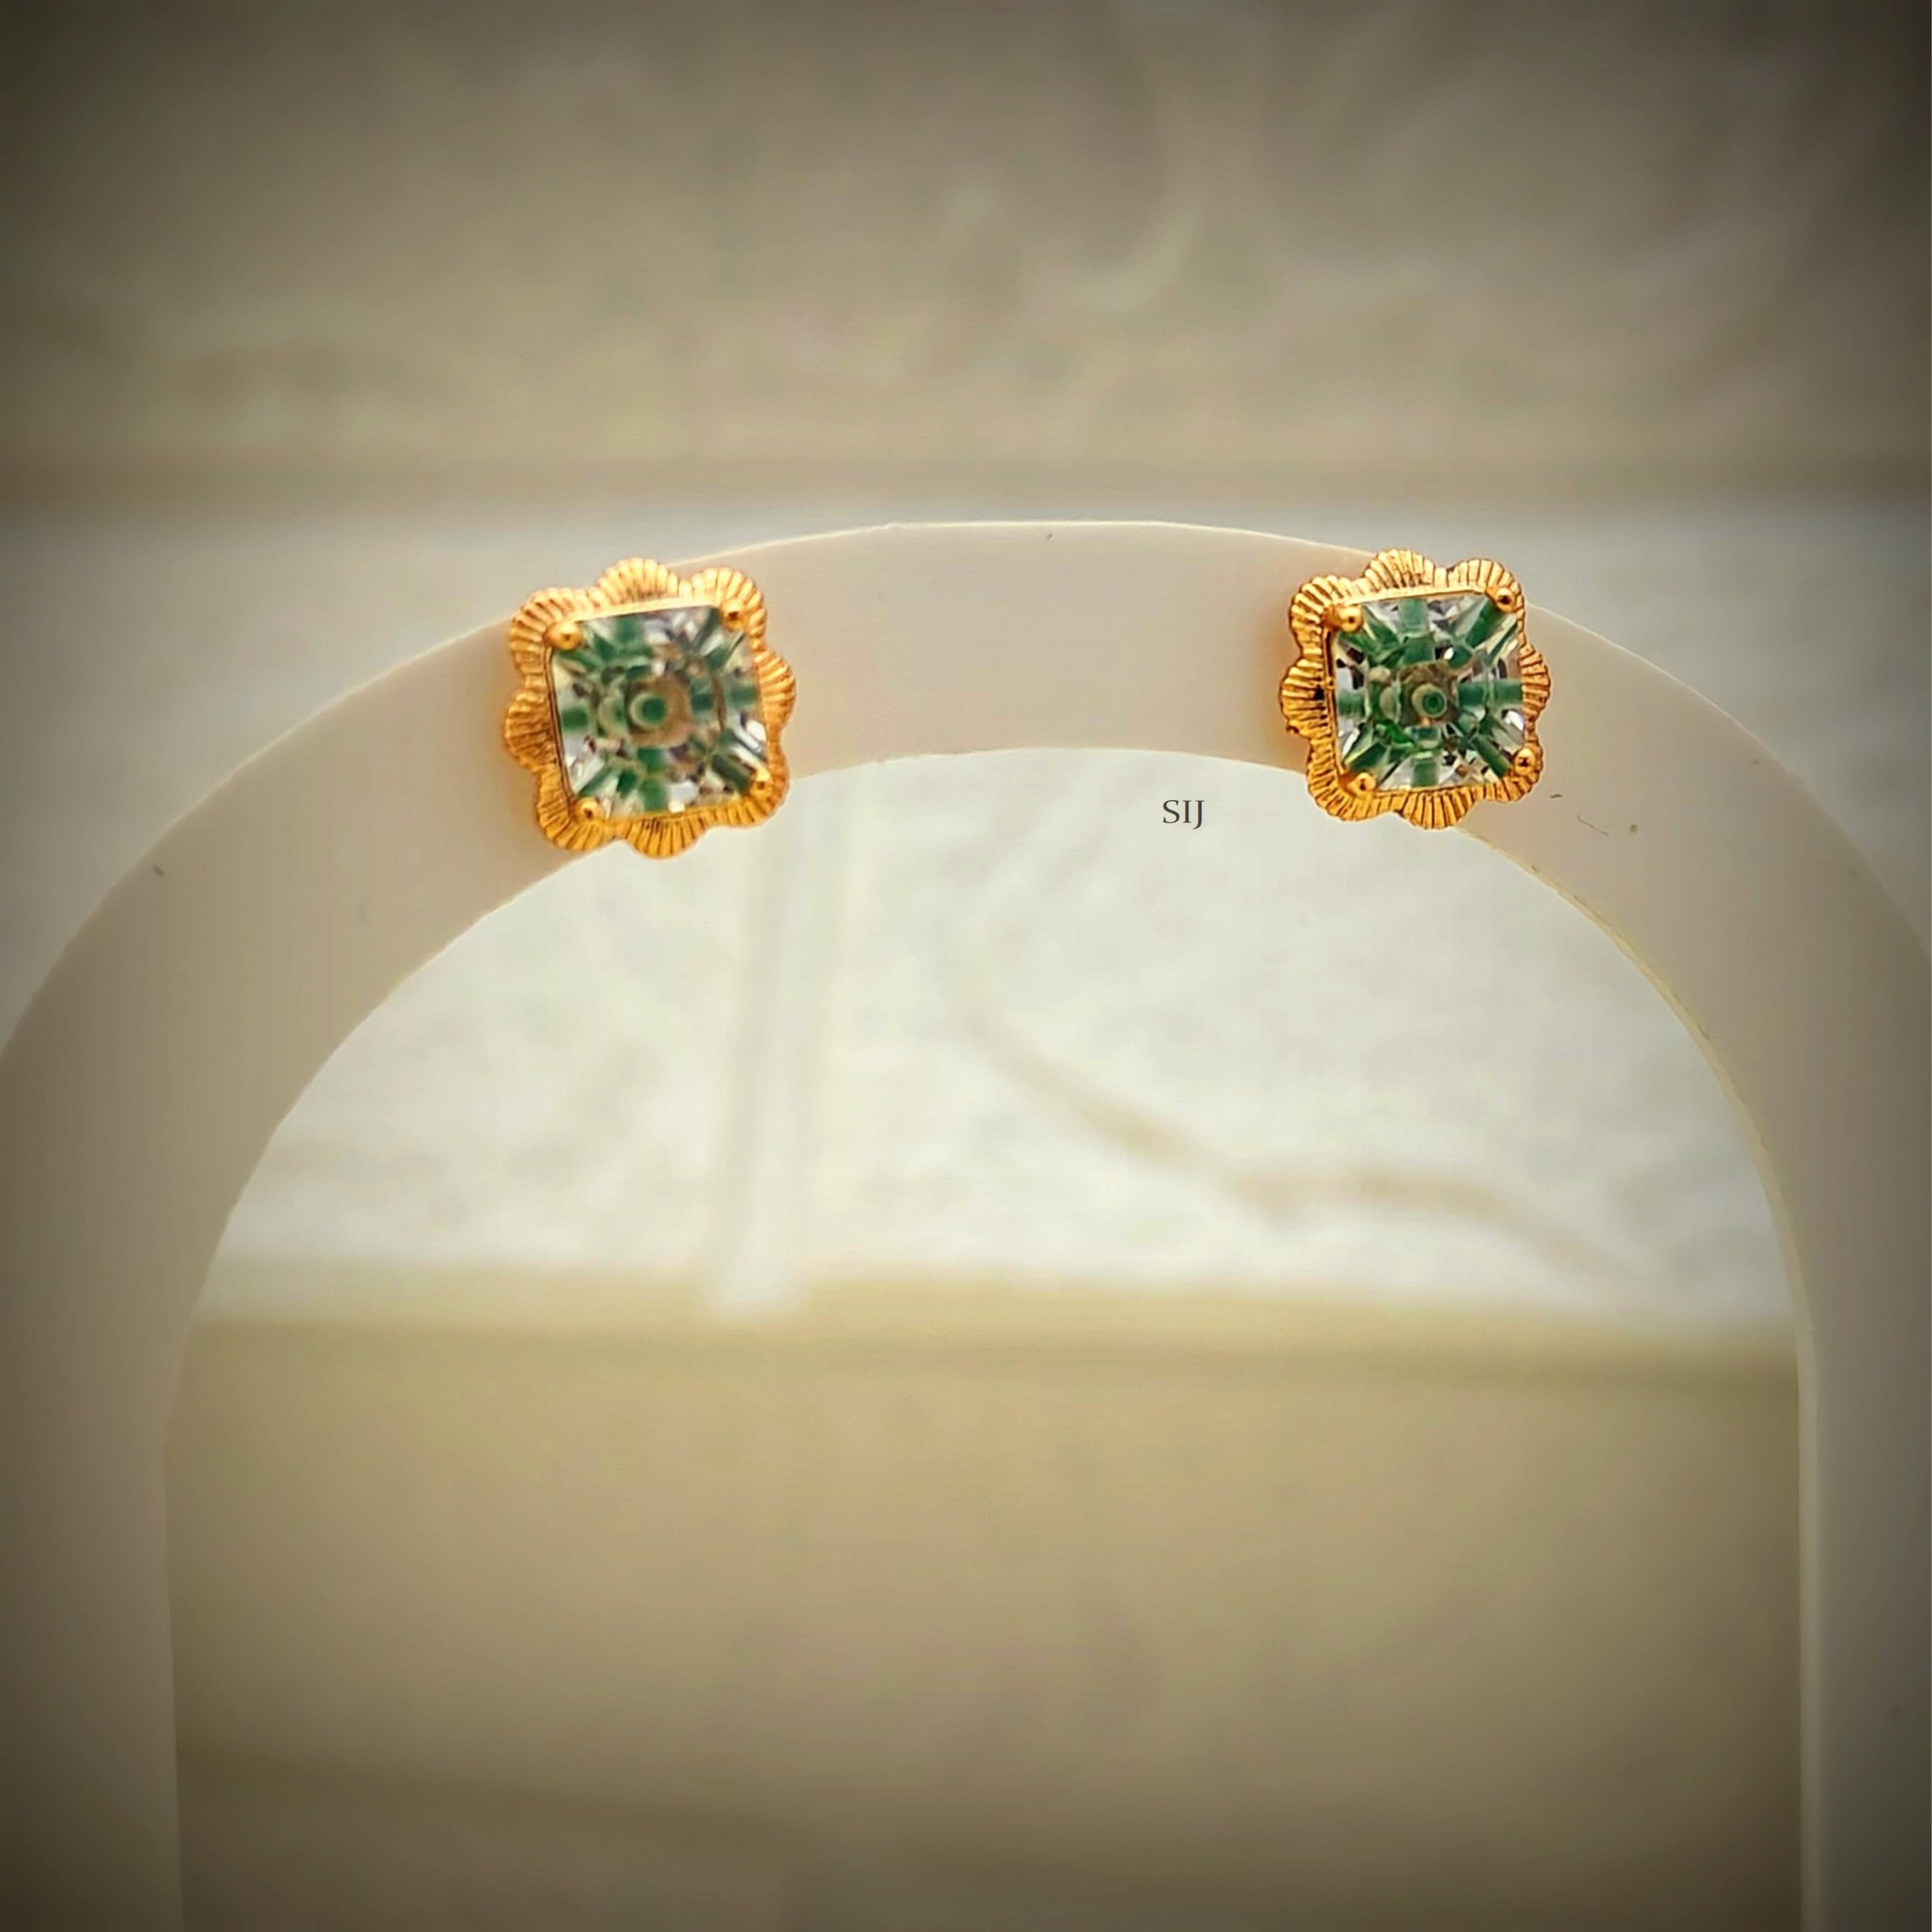 Green Stone Studded Earrings